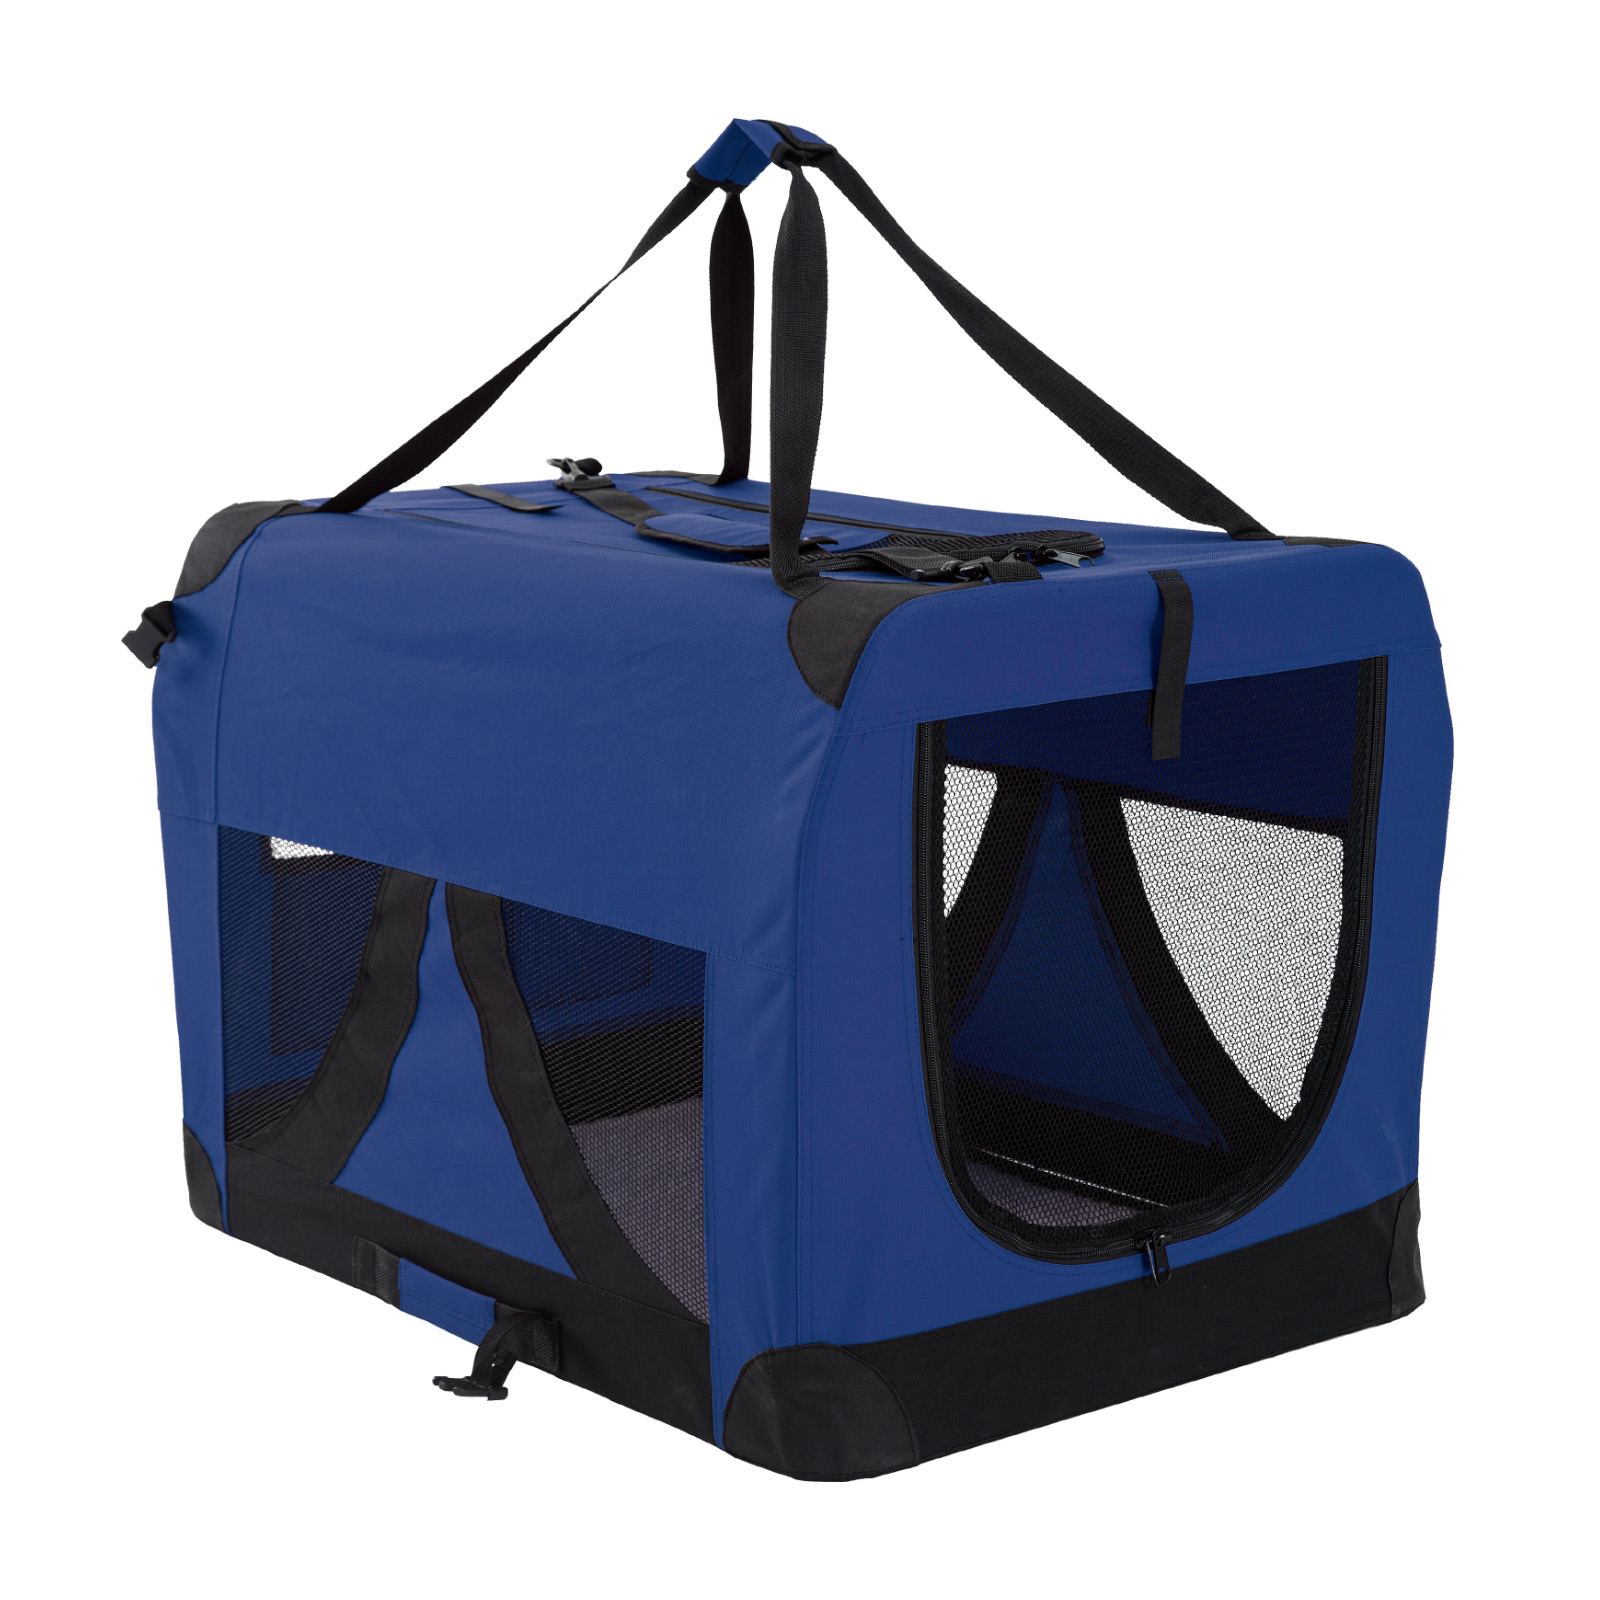 XL Portable Soft Dog Crate - BLUE